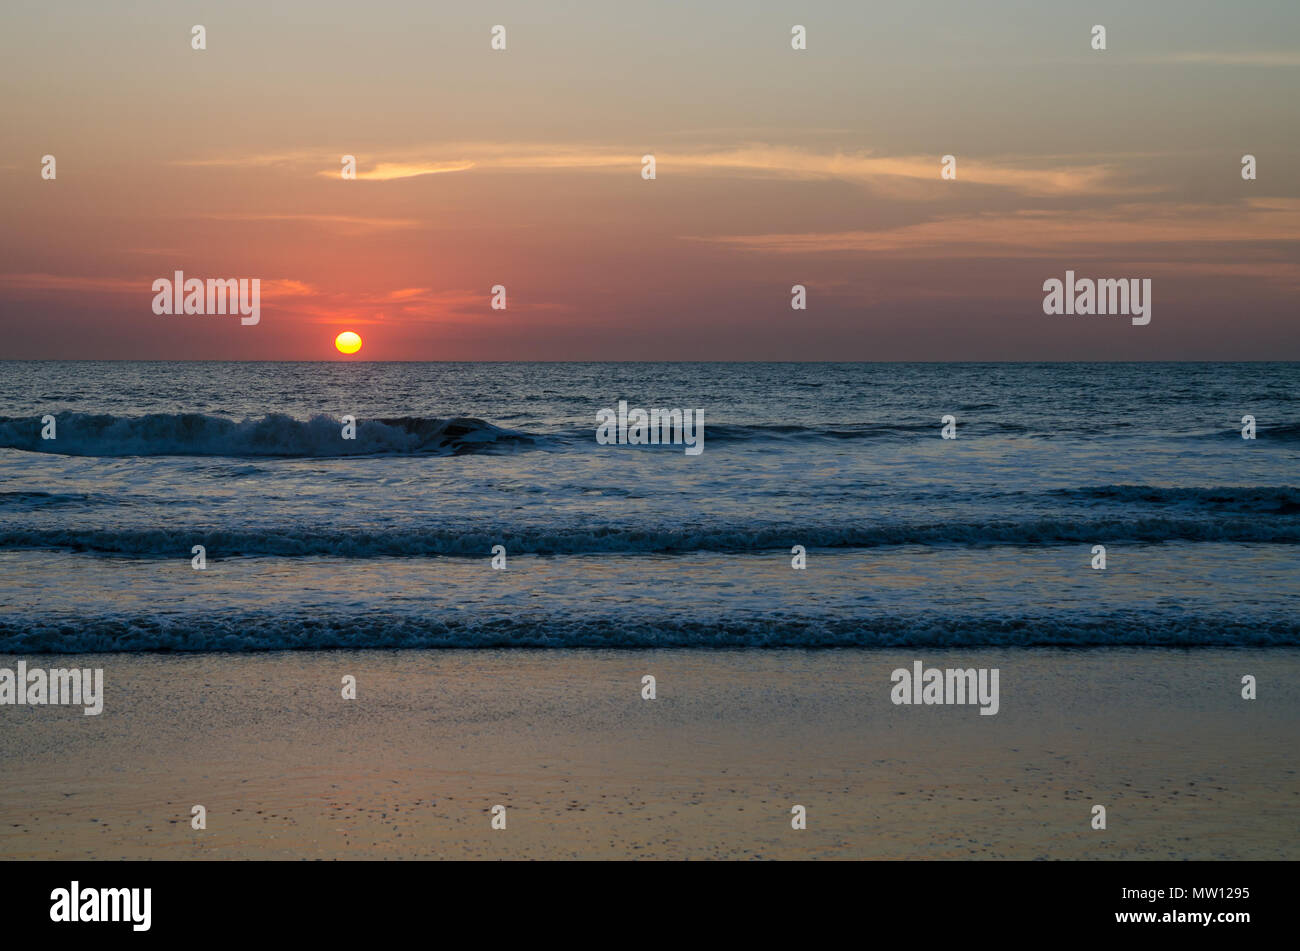 Beautiful Scenic Sunset At Empty Beach In Casamance Region Of Senegal Africa Stock Photo Alamy